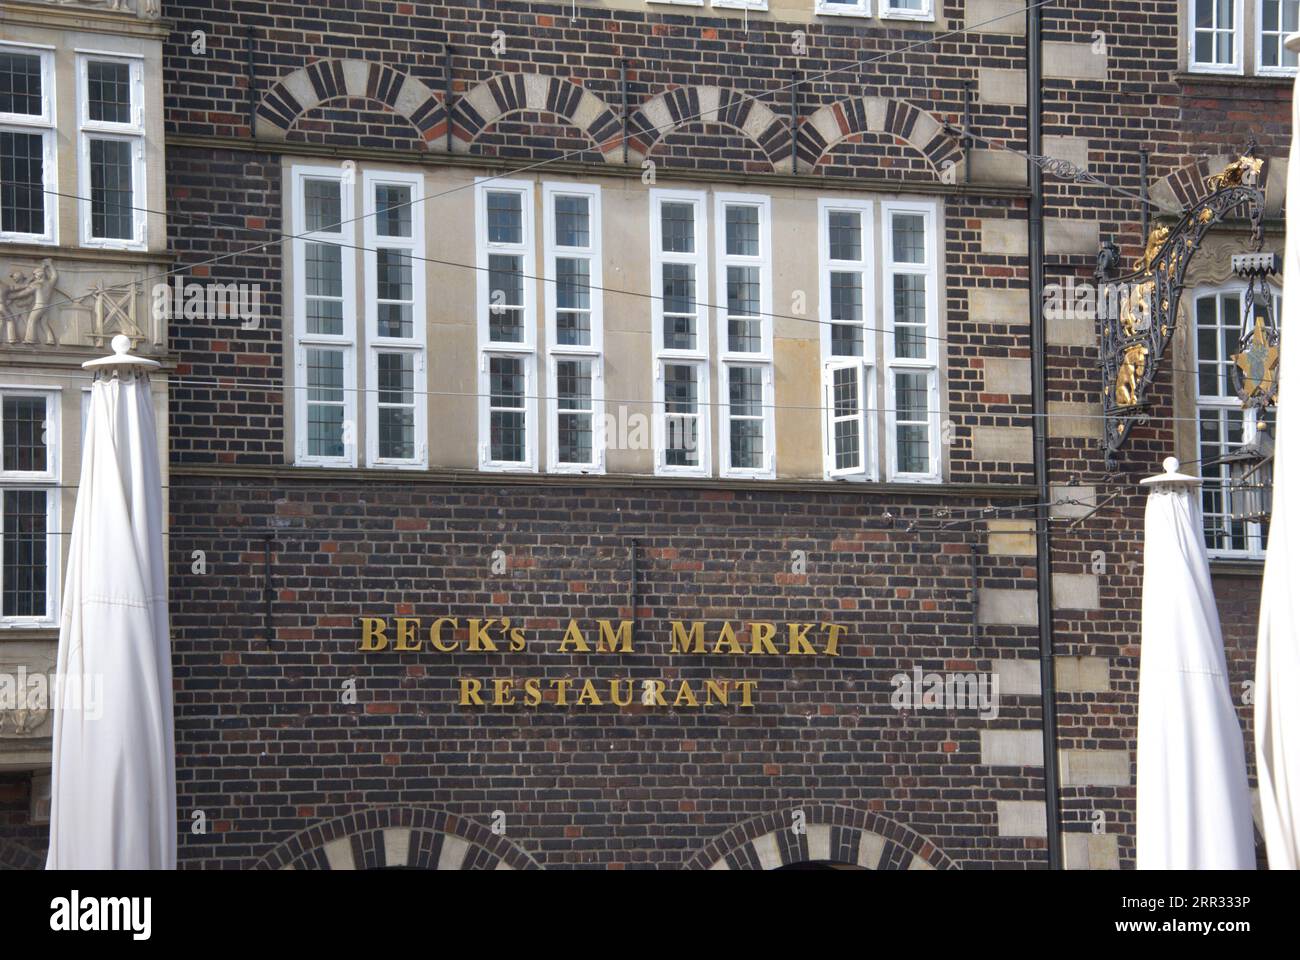 Beck's am Markt restaurant in historic building. Stock Photo